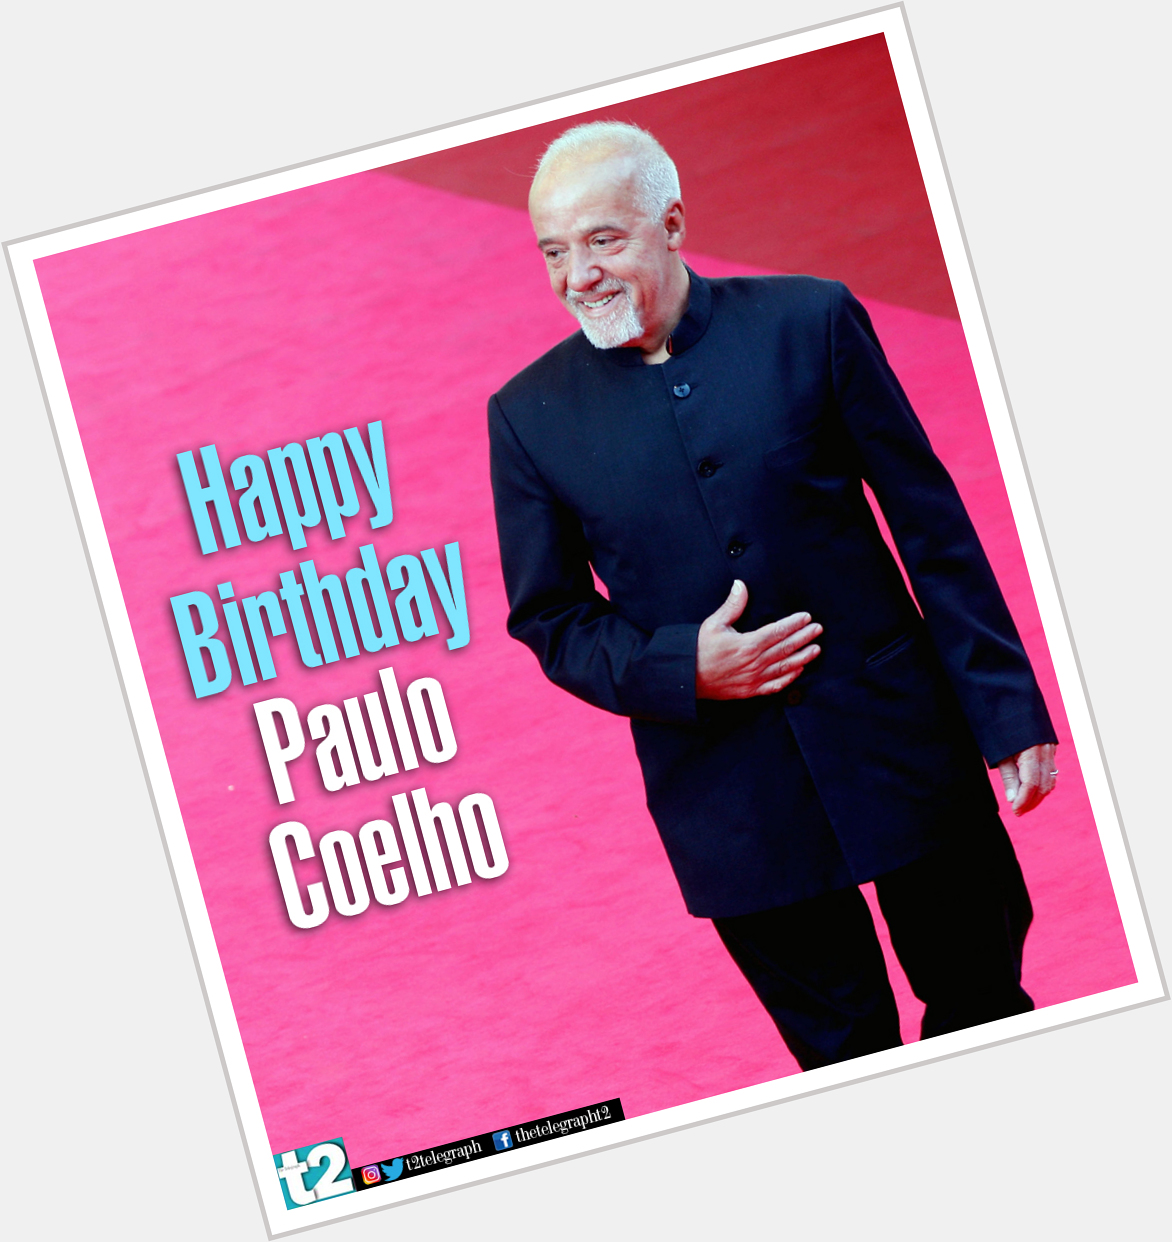 T2 wishes the alchemist of words Paulo Coelho, a very happy birthday. 